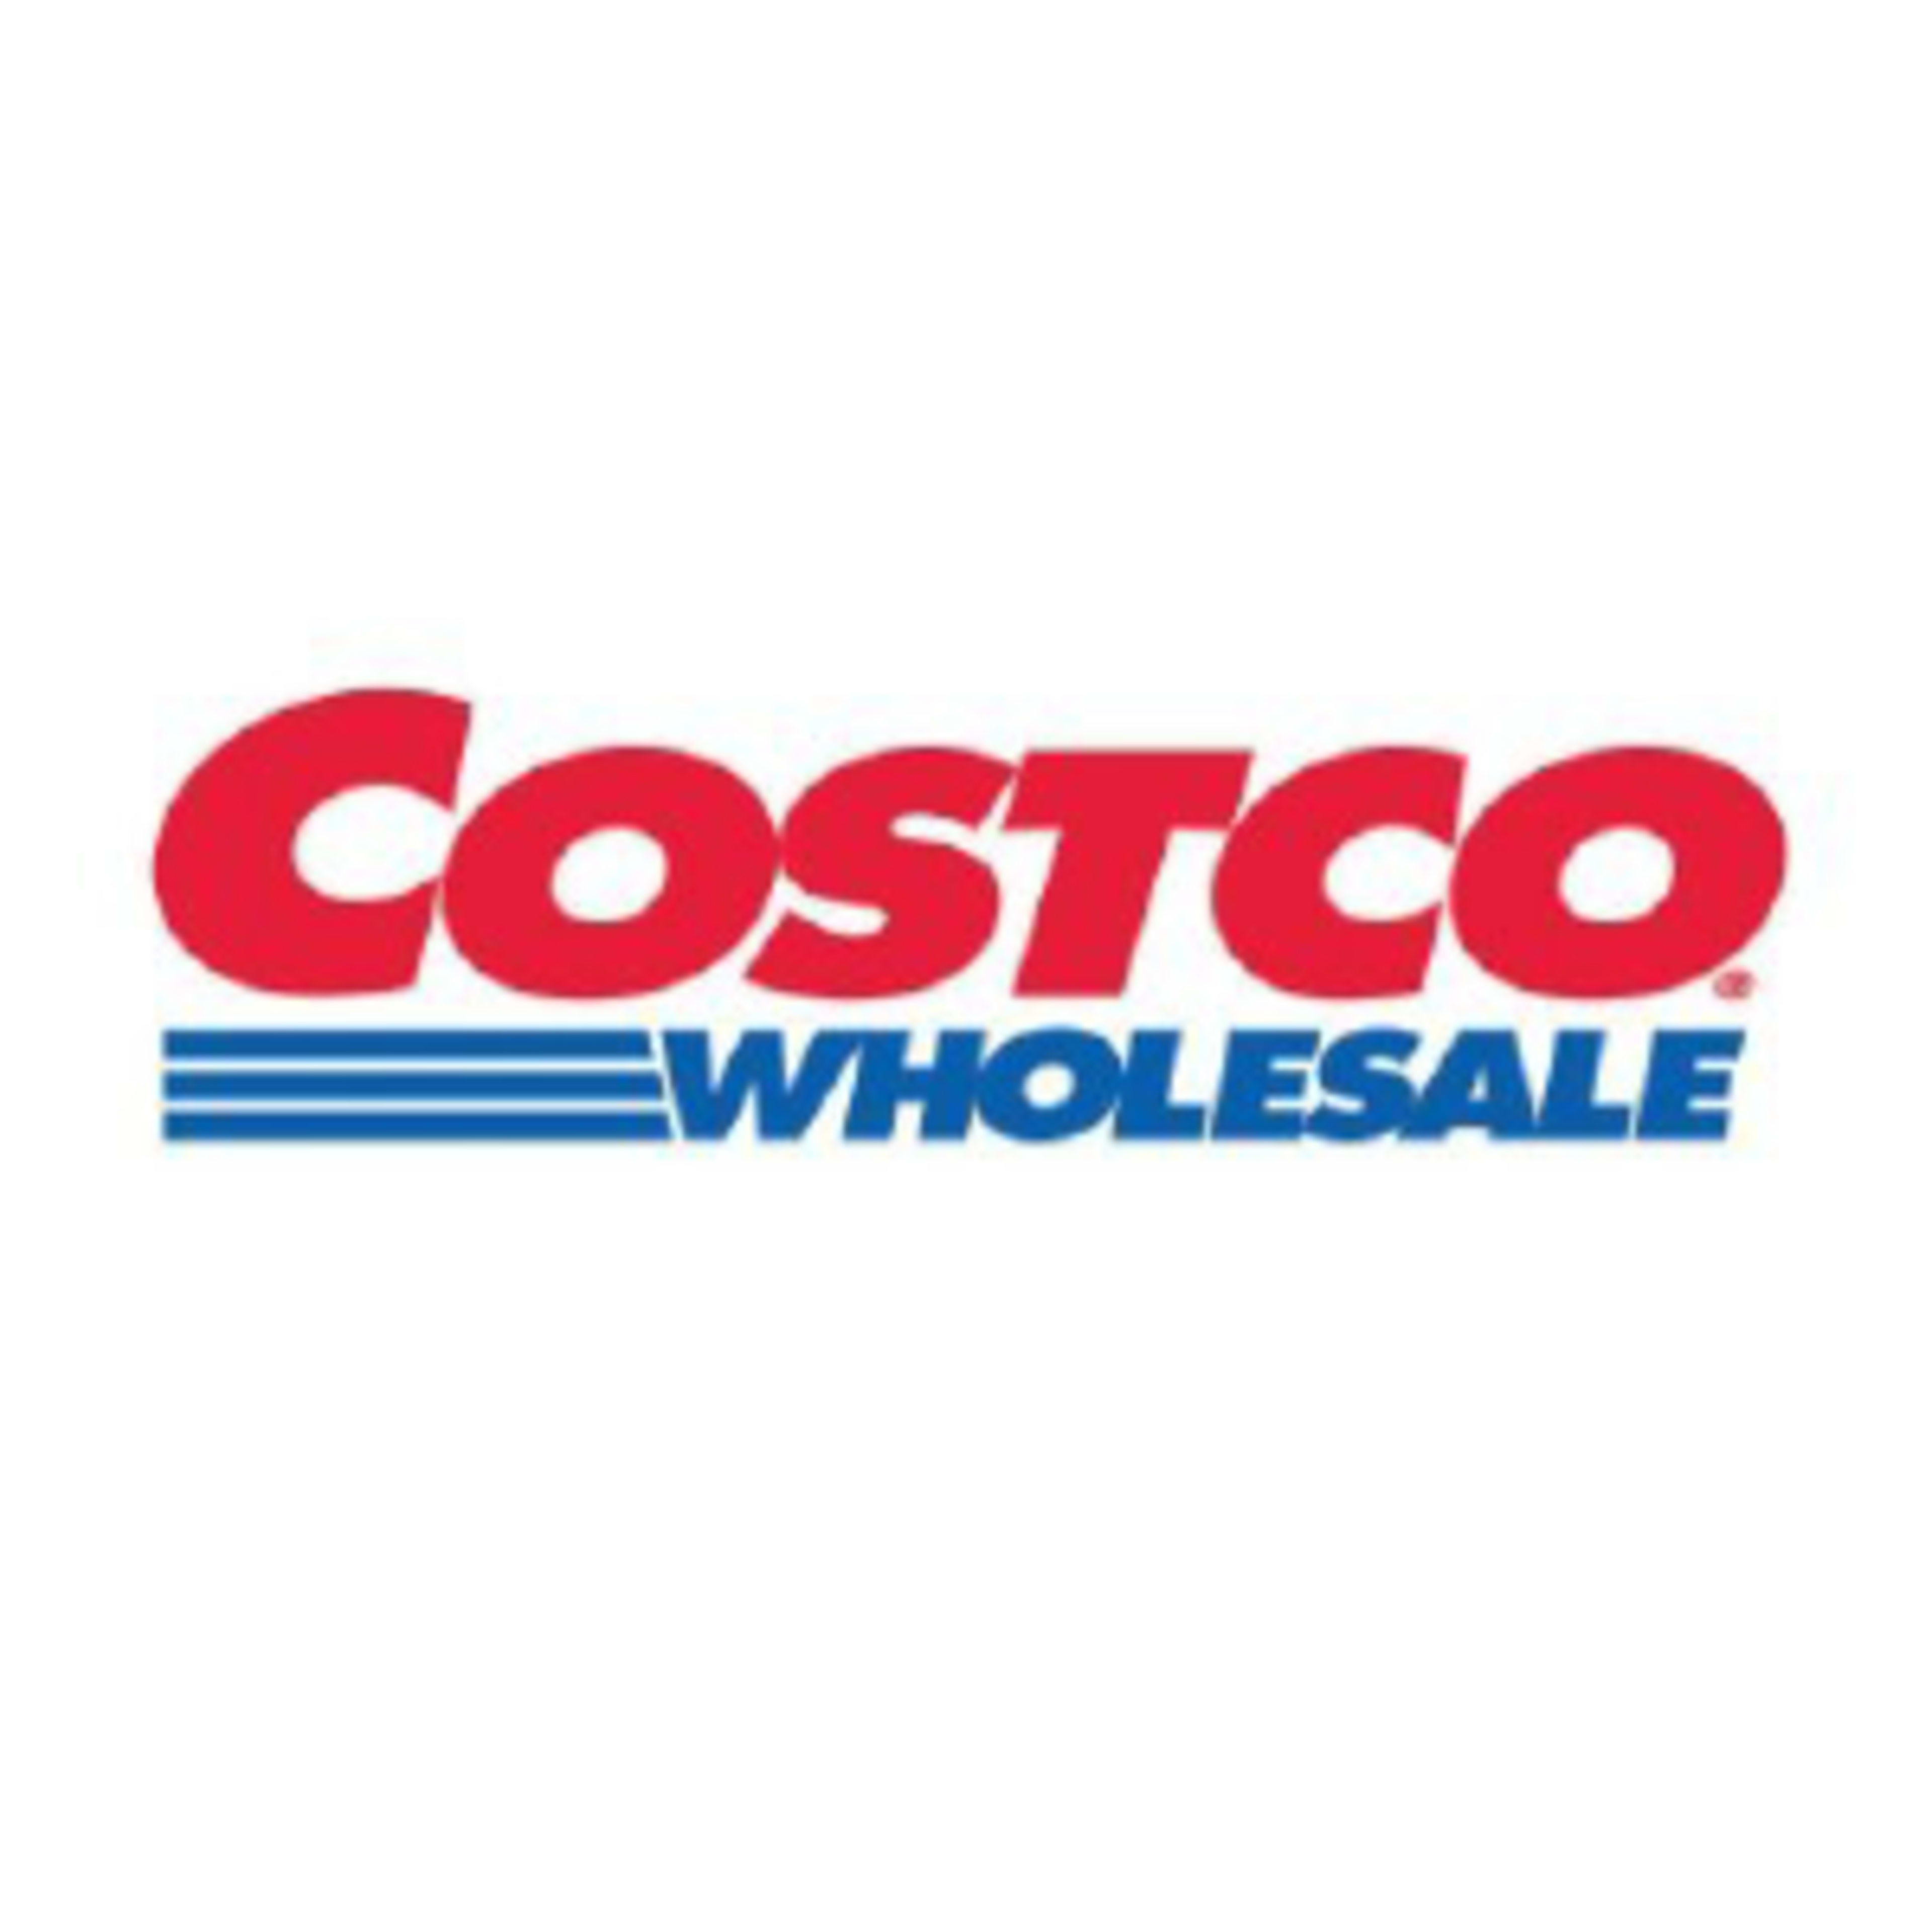 Costco Membership Offer Code